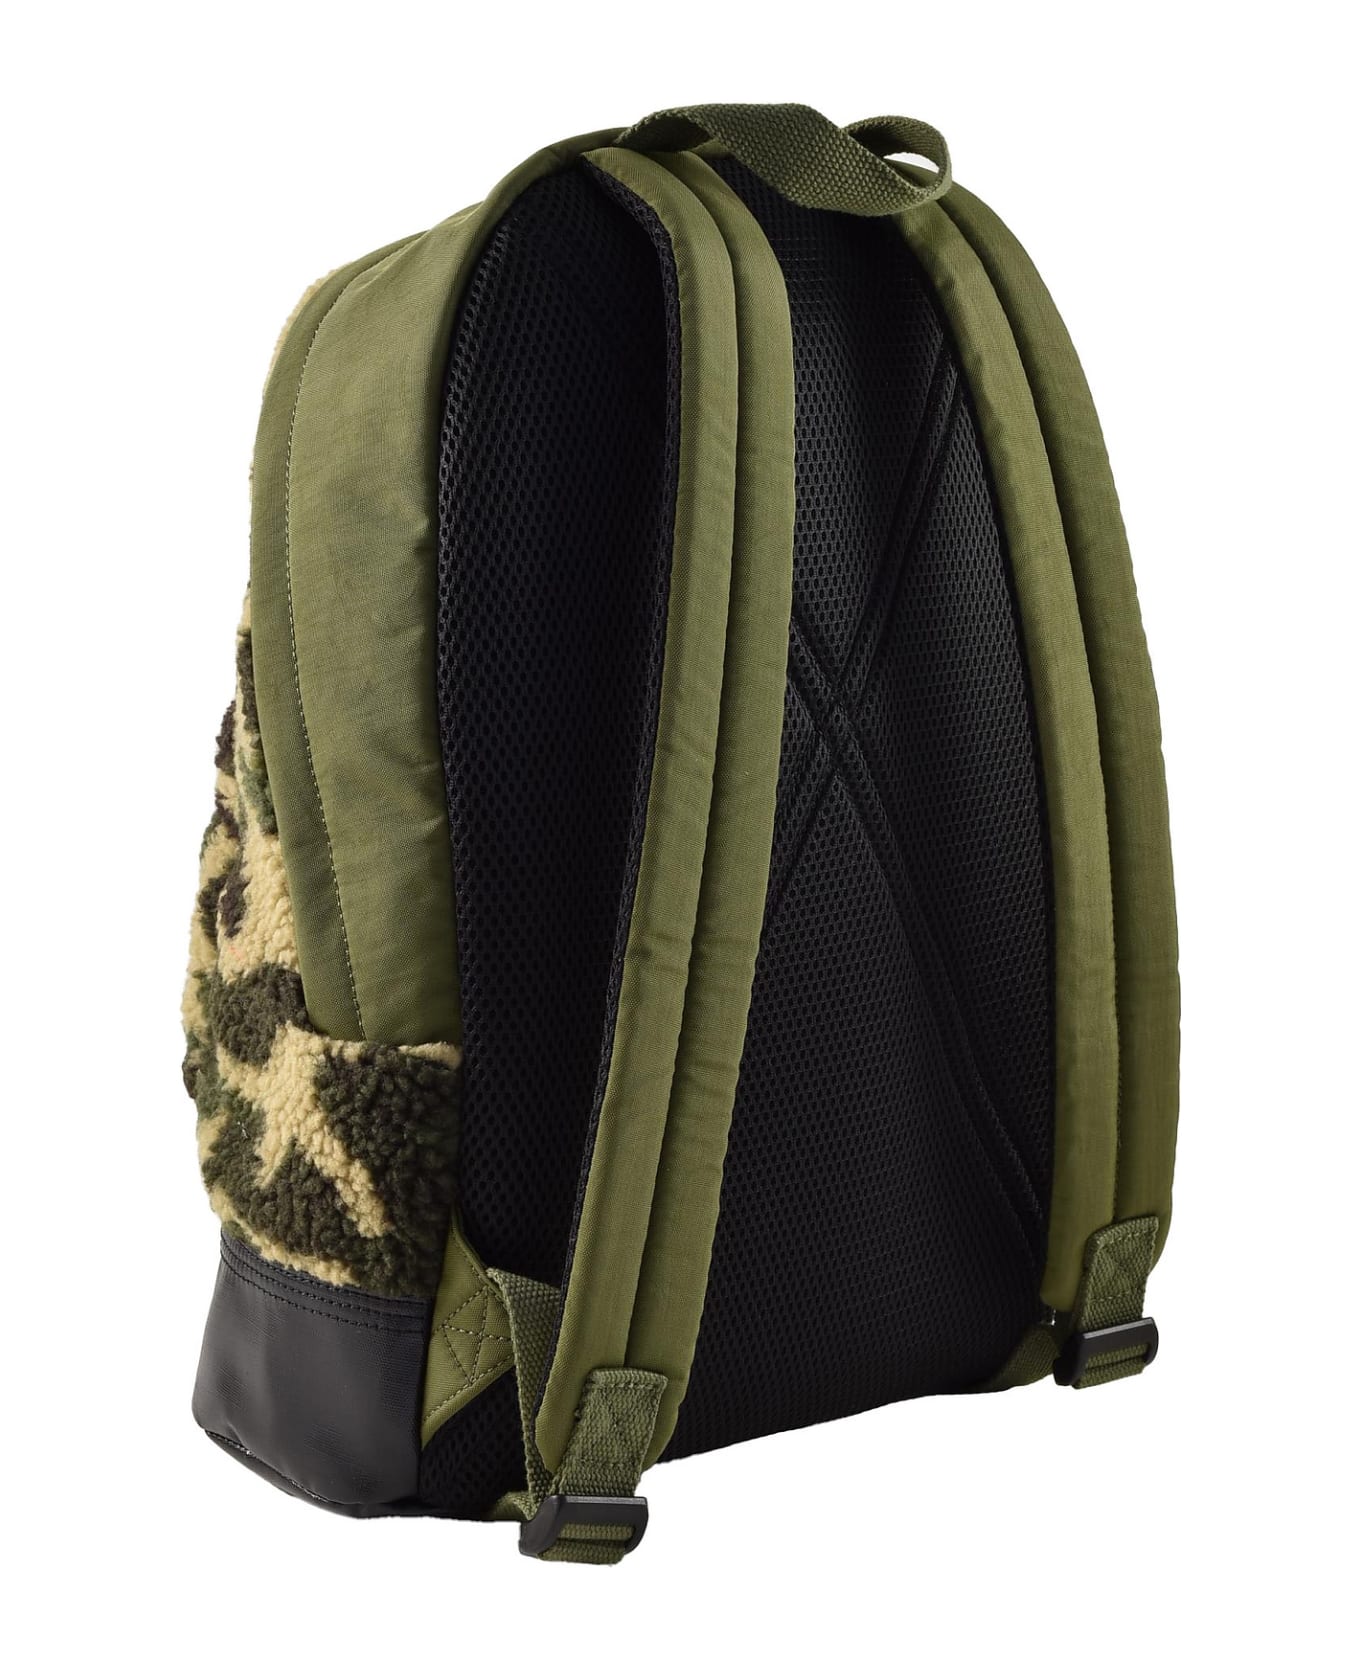 Diesel Men's Green Backpack - Green